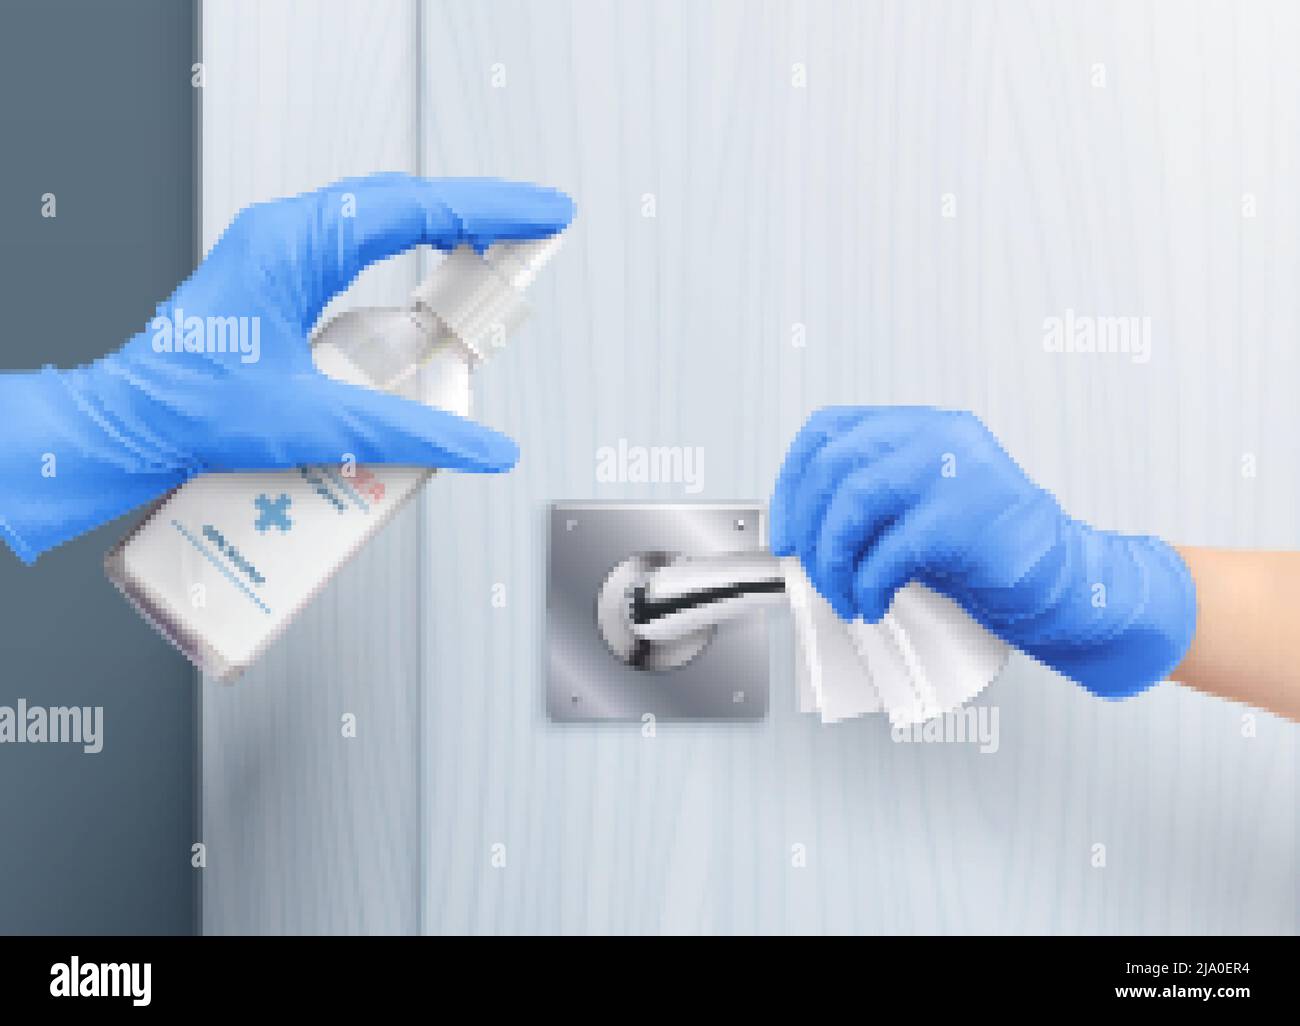 Hands in gloves door handle desinfection realistic composition with human hands applying sanitizer disinfecting door pull vector illustration Stock Vector